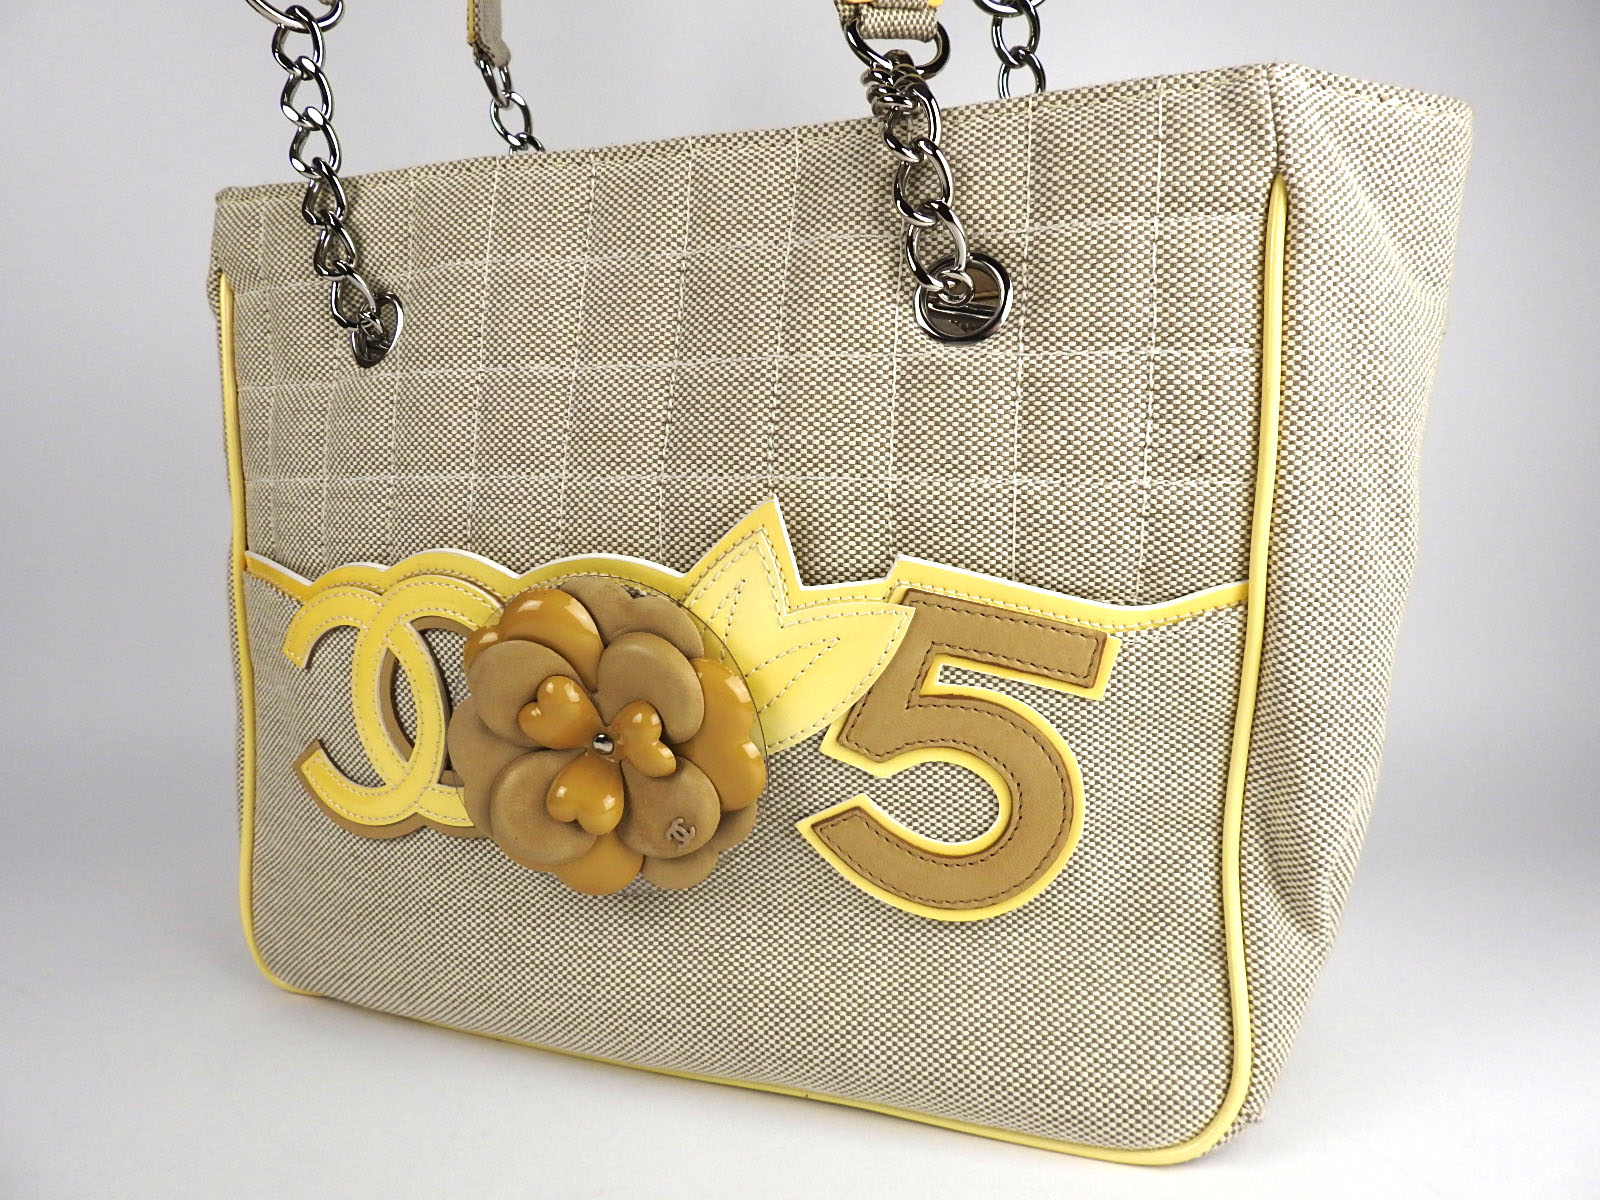 Pochette Metis Style Monogram 25 cm Canvas Crossbody Handbag Tote Bag Shoulder Bag by LAMB